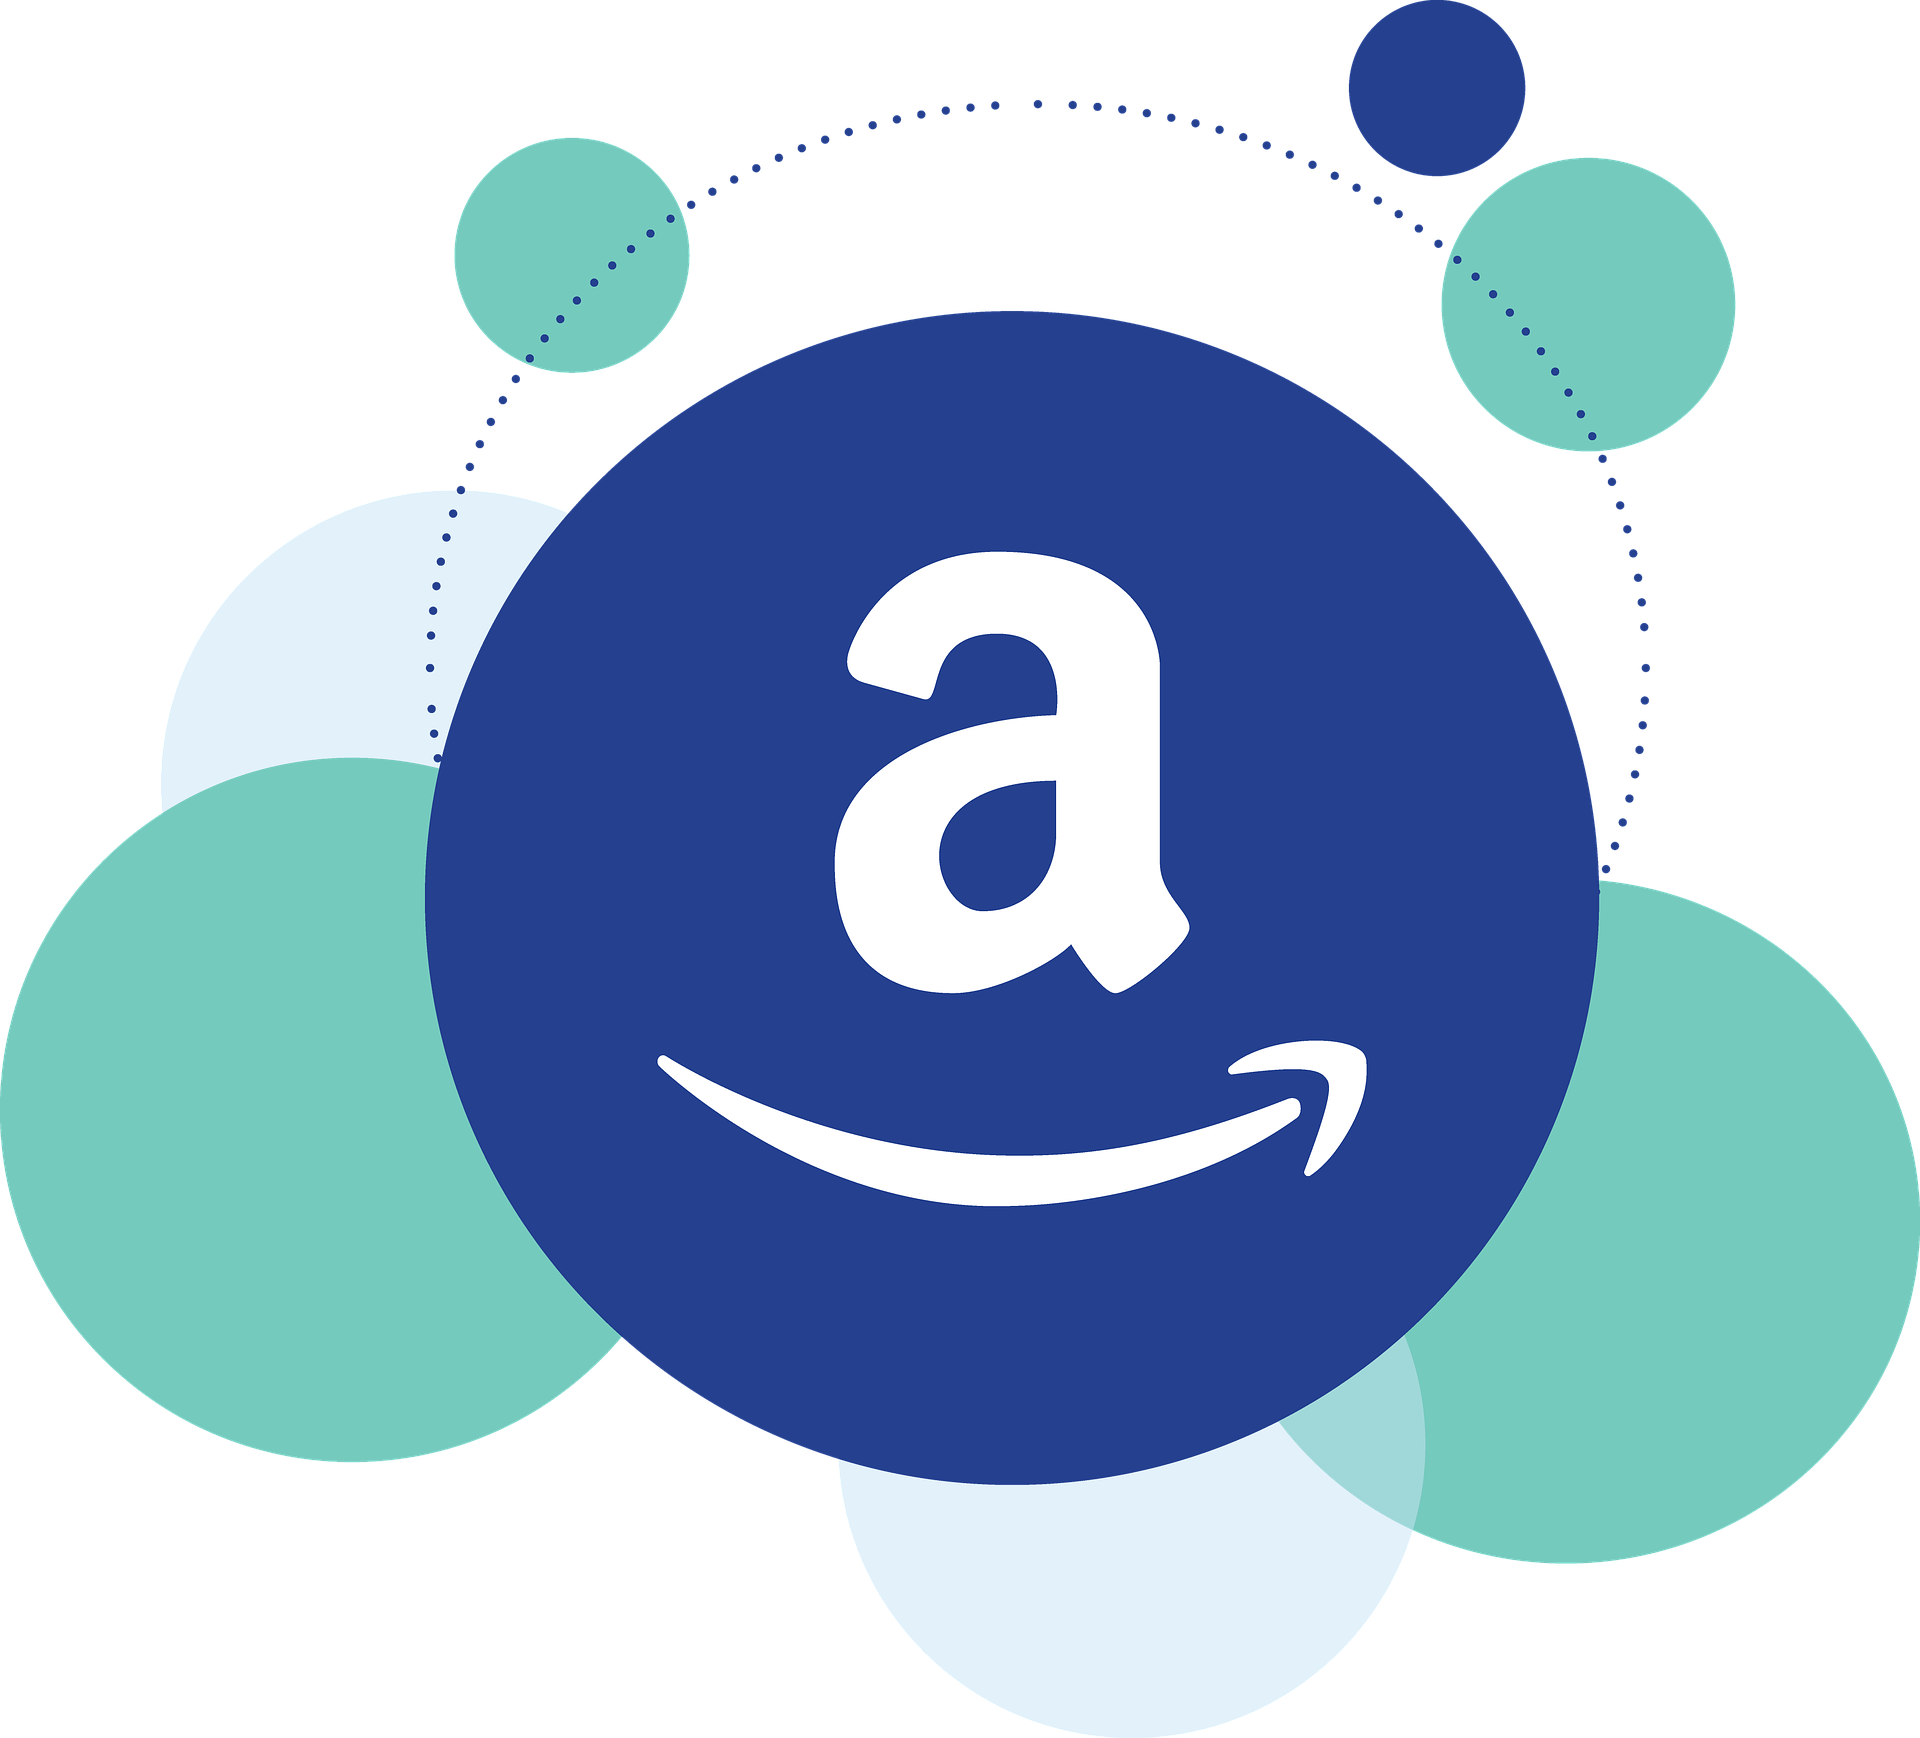 世界経済　海外企業編　Amazon.com, Inc.